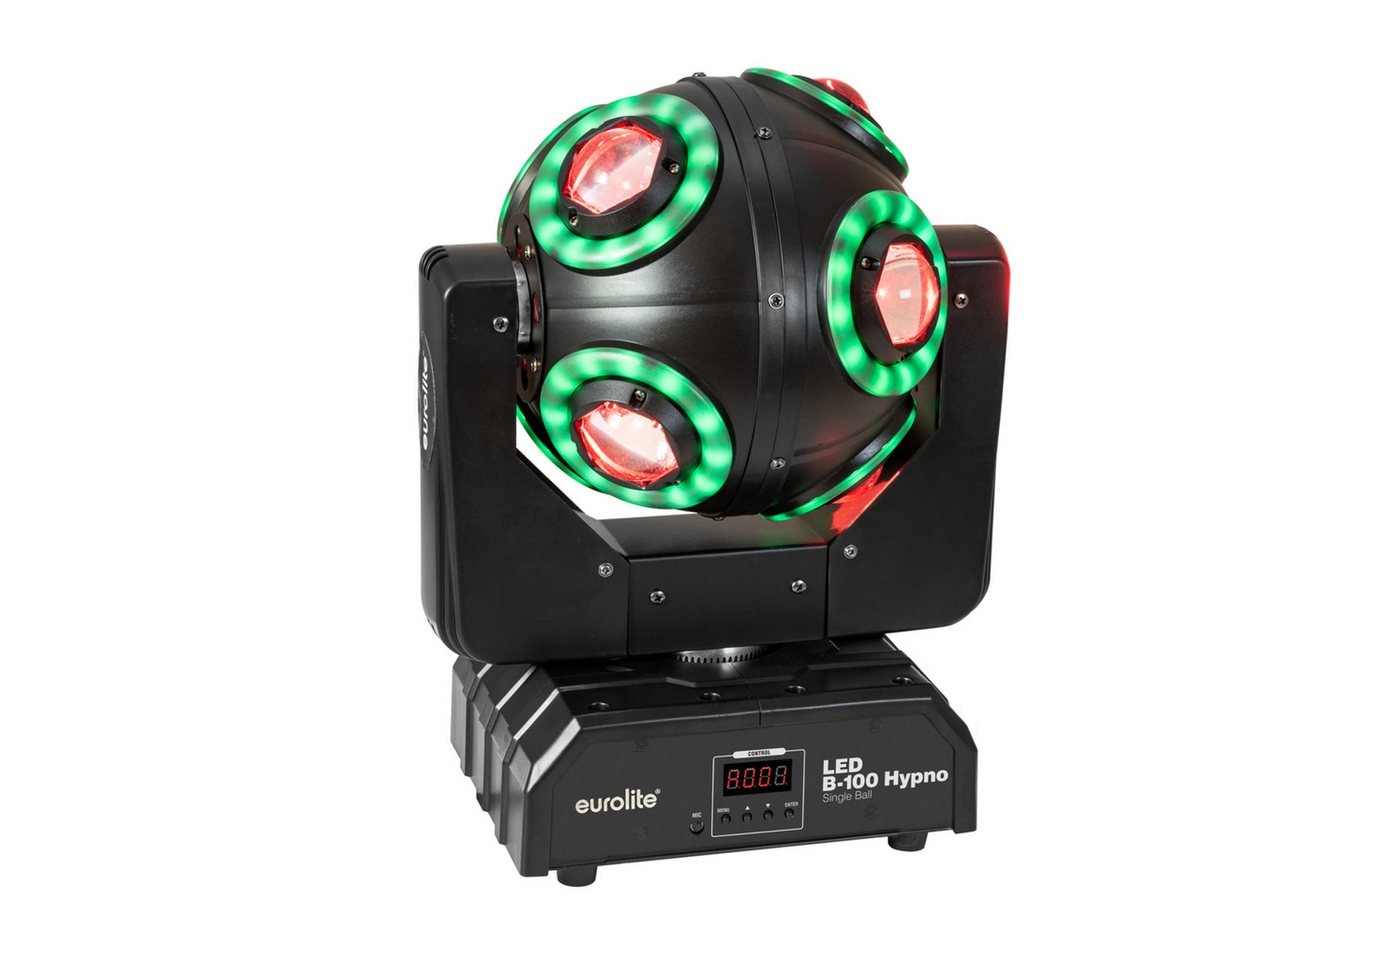 EUROLITE LED Scheinwerfer, LED B-100 Hypno Single Ball Strahleneffekt - Showeffekt von EUROLITE